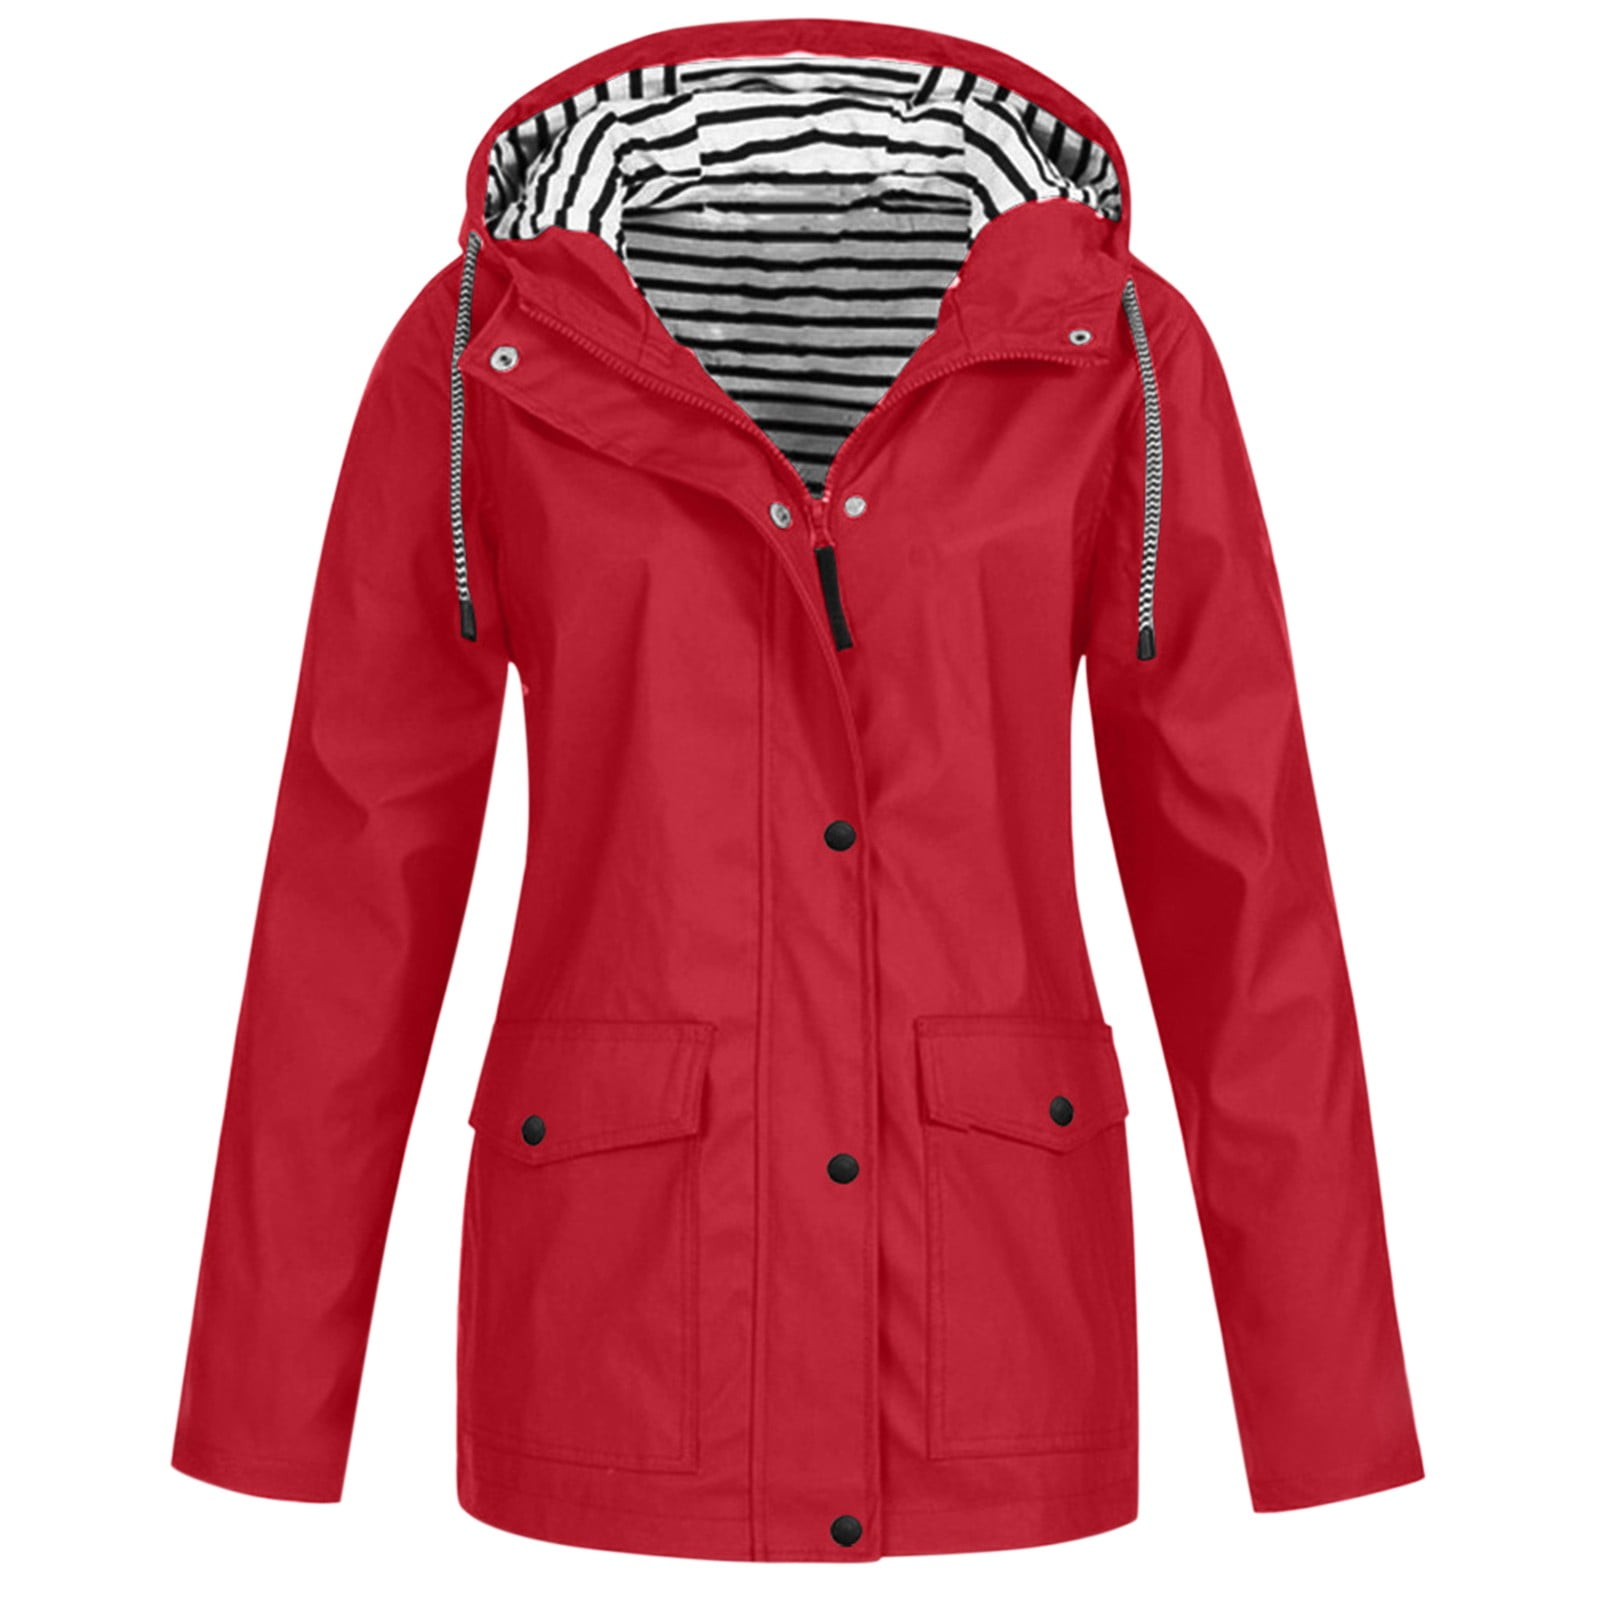 KDFJPTH Women Casual Solid Jacket Outdoor Plus Size Hooded Windproof ...